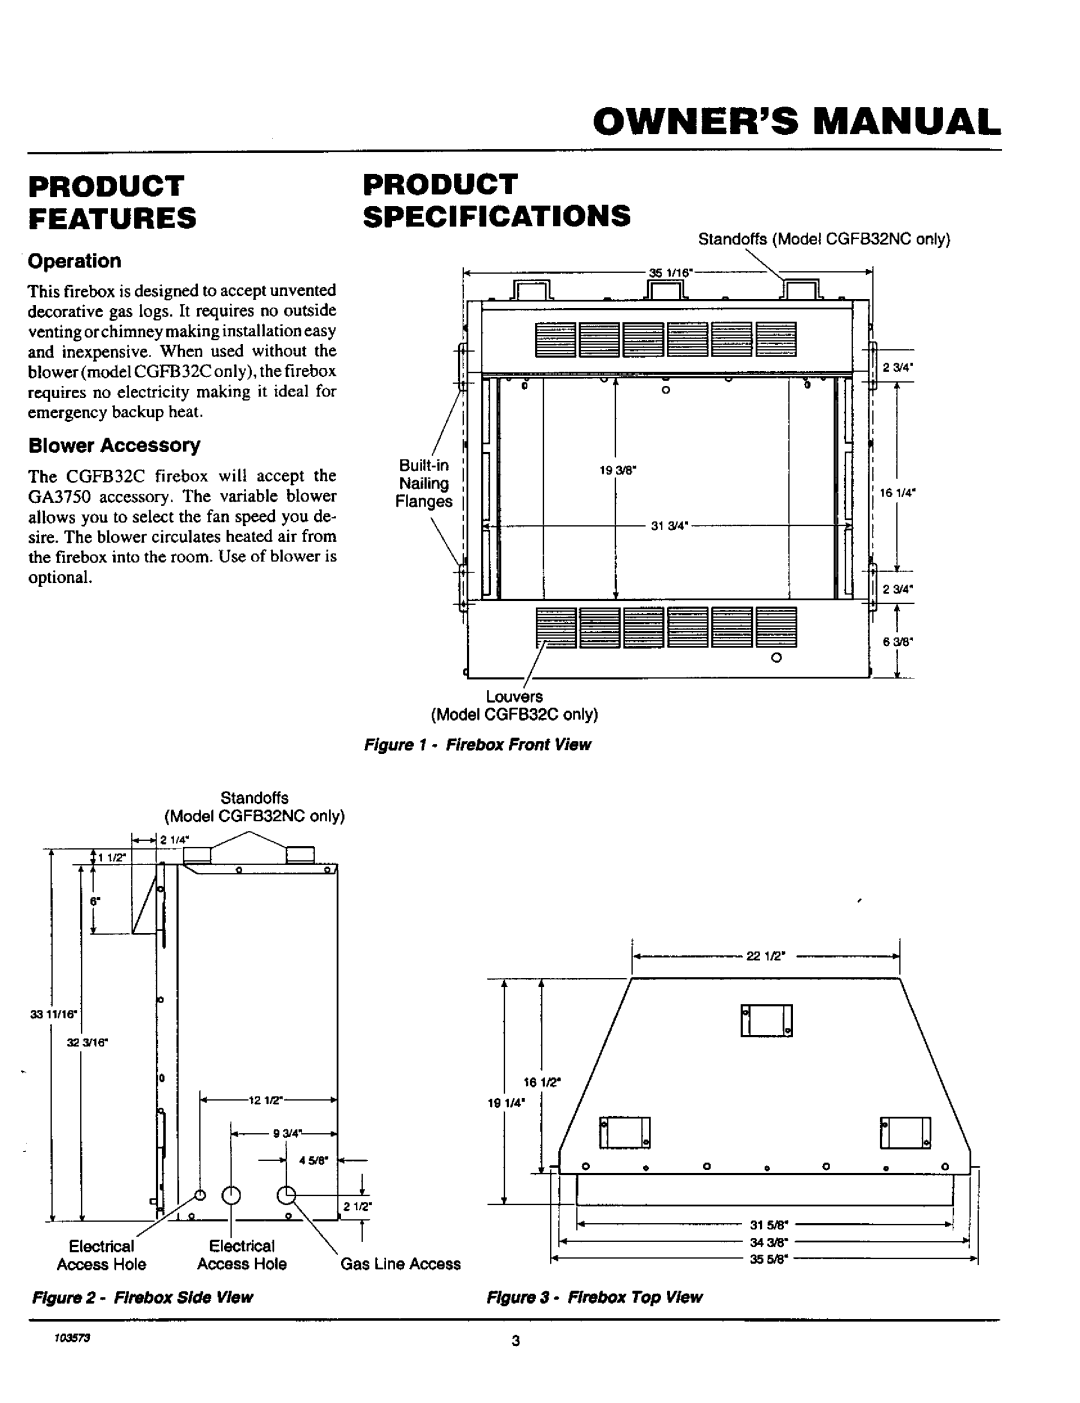 Desa Tech CGFB32C, CGFB32NC Owners Manual, Productproduct Featuresspecifications, li, ?, Firebox Top View 